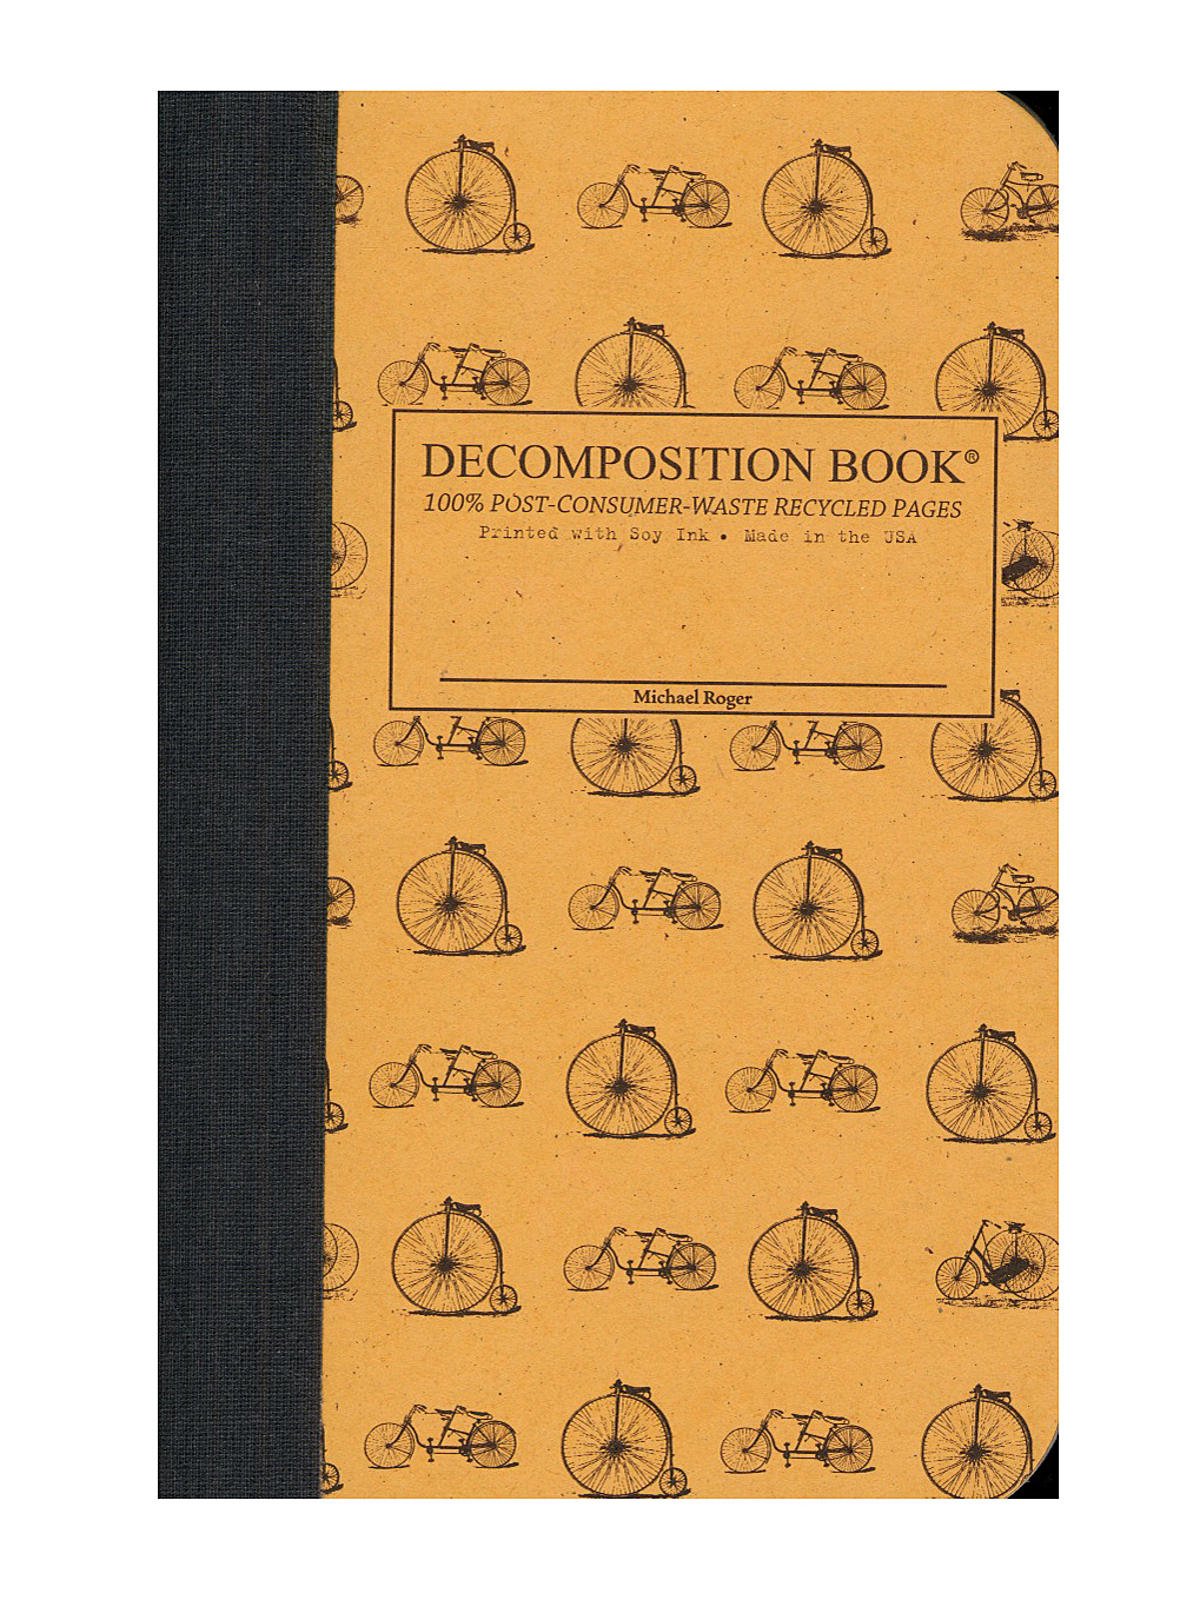 Michael Roger Press - Pocket-Size Decomposition Books